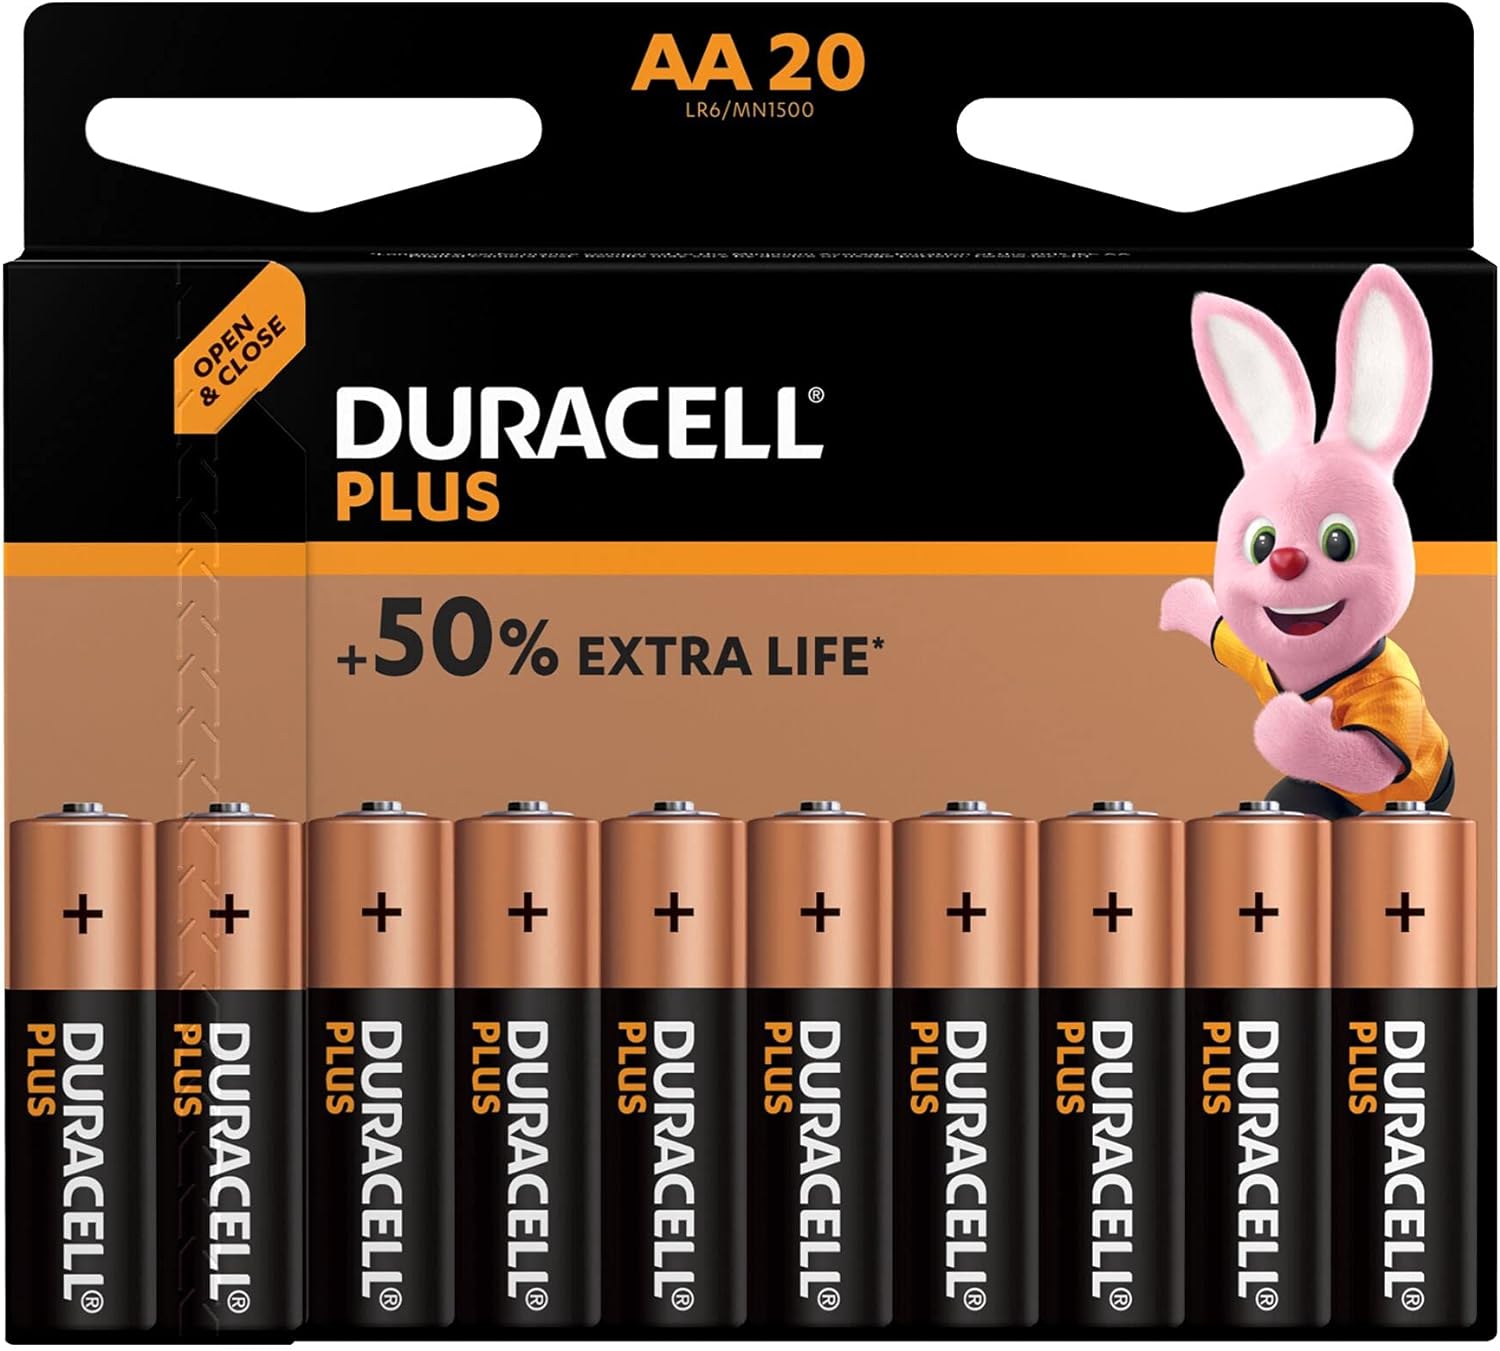 Duracell Plus AA Alkaline Batteries - Pack of 20